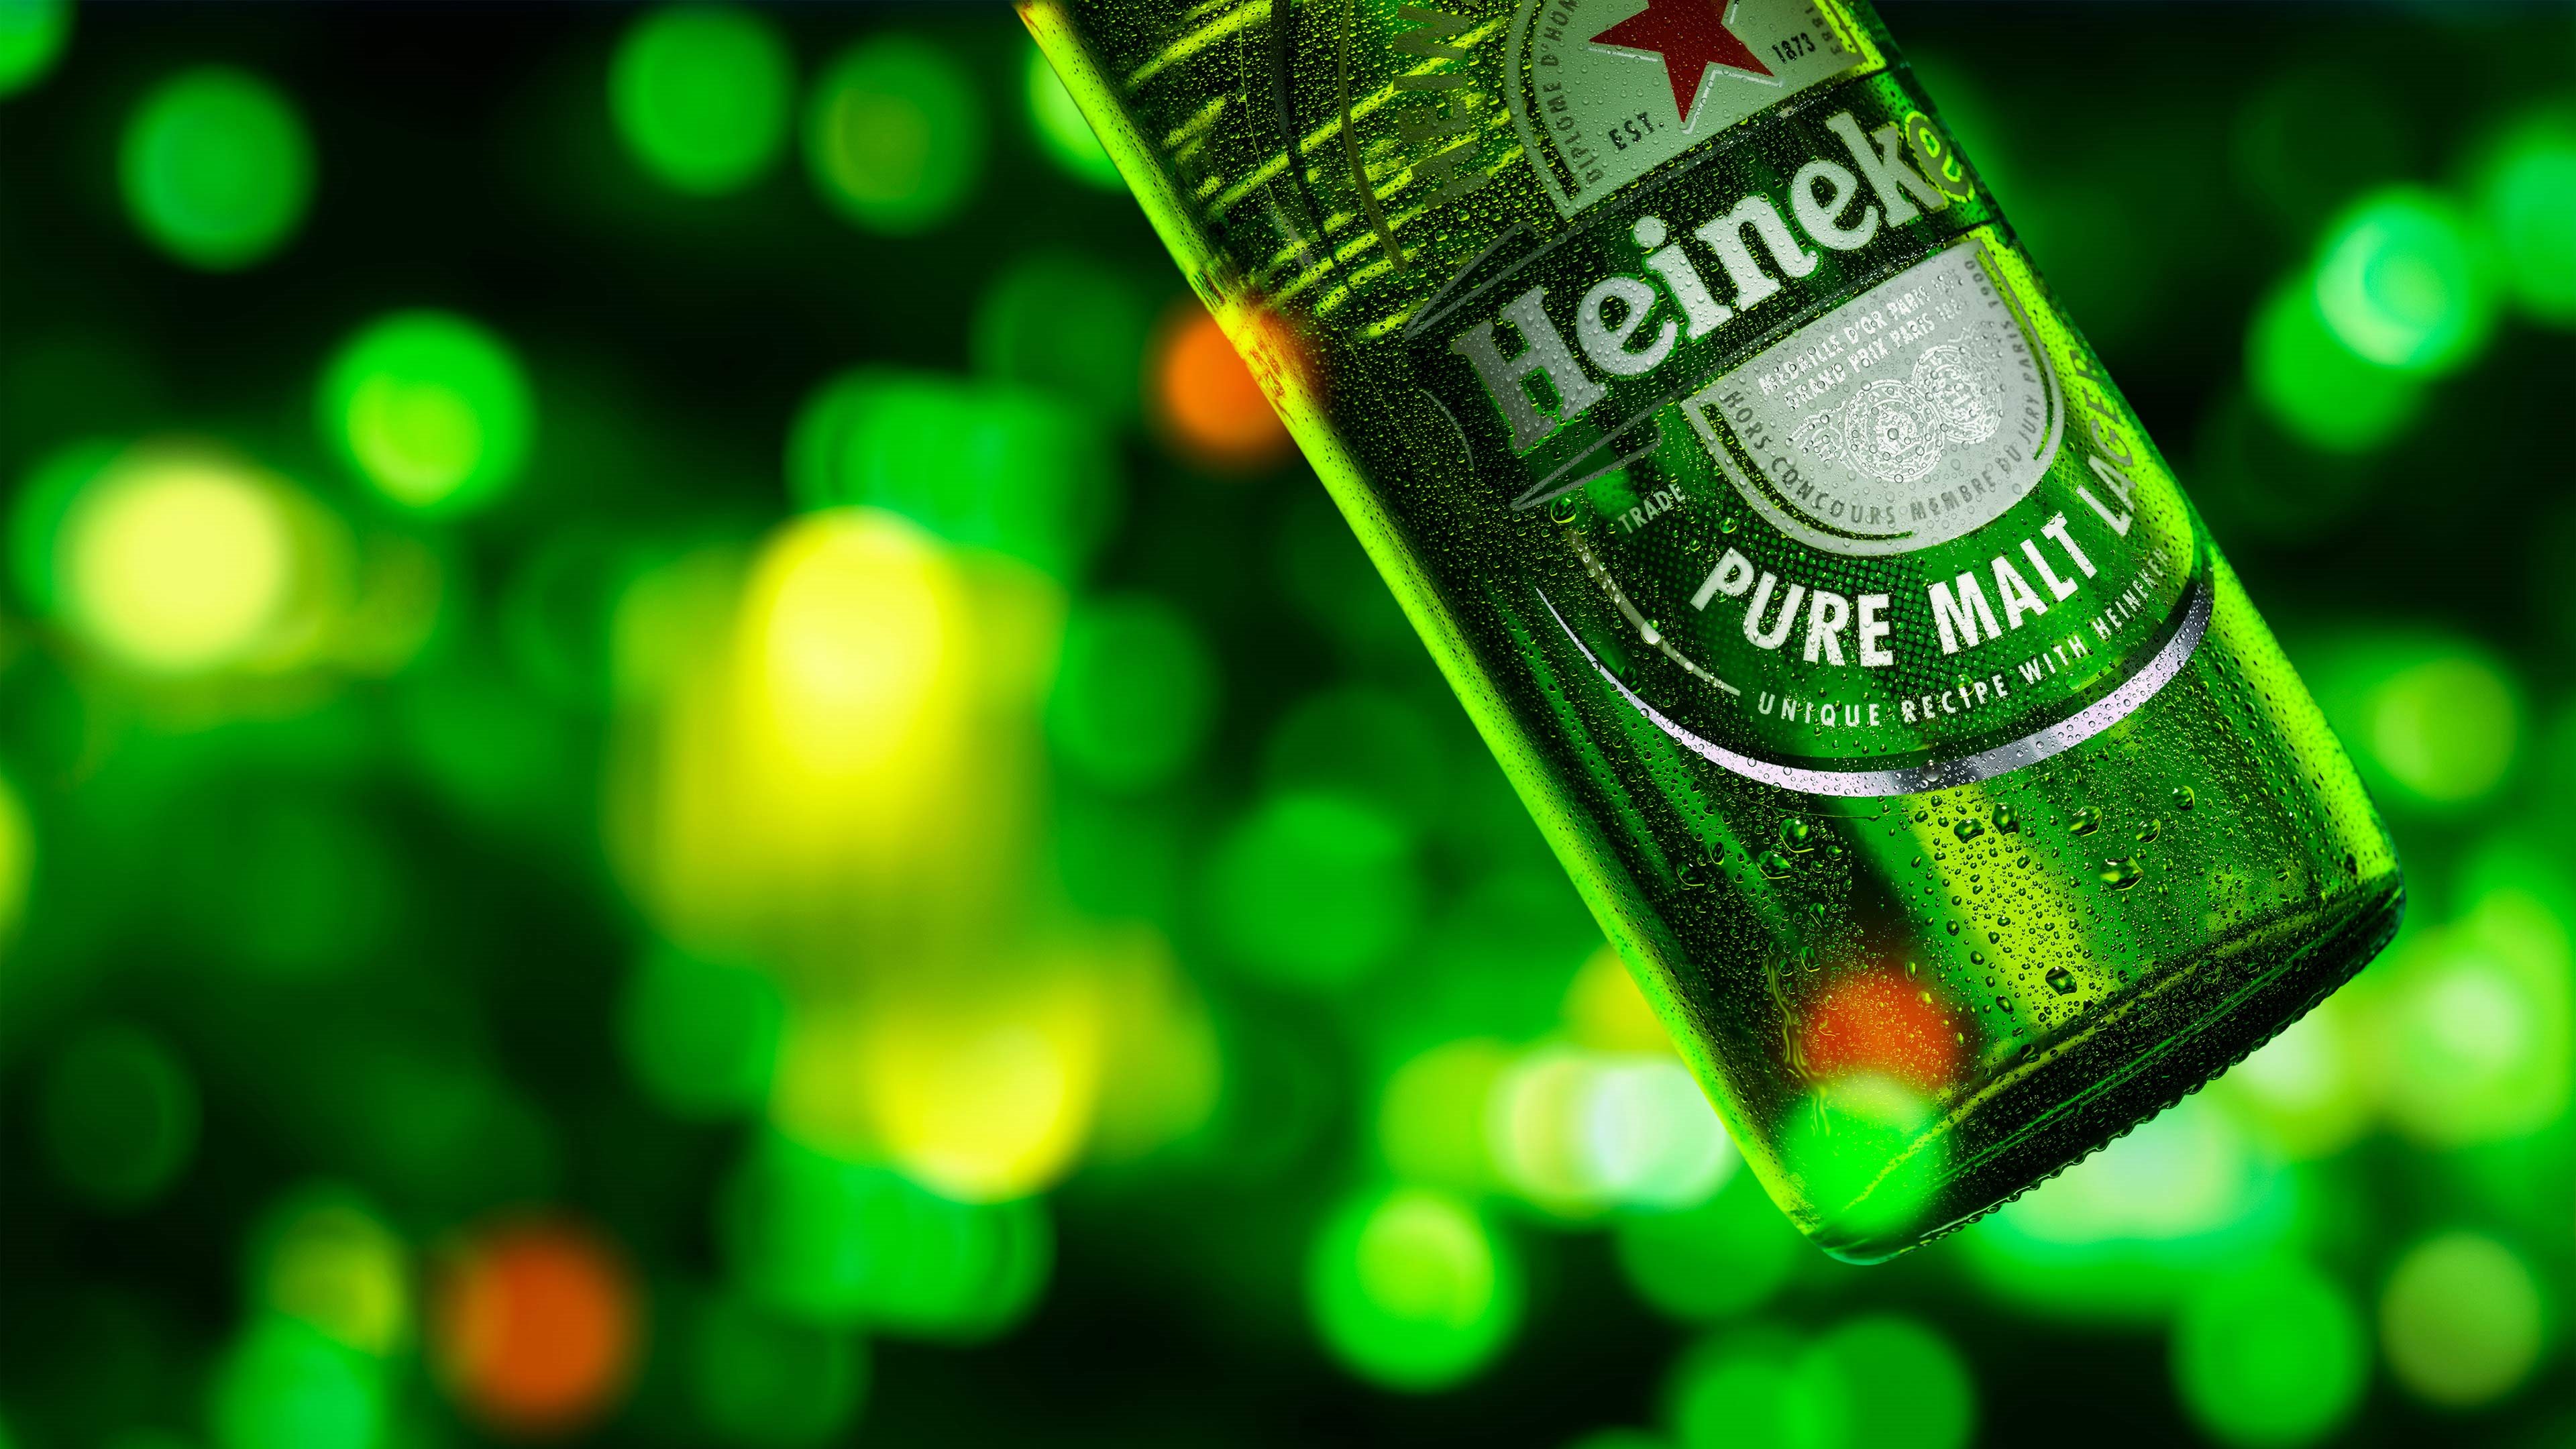 Bienvenidos al mundo Heineken® | Heineken.com